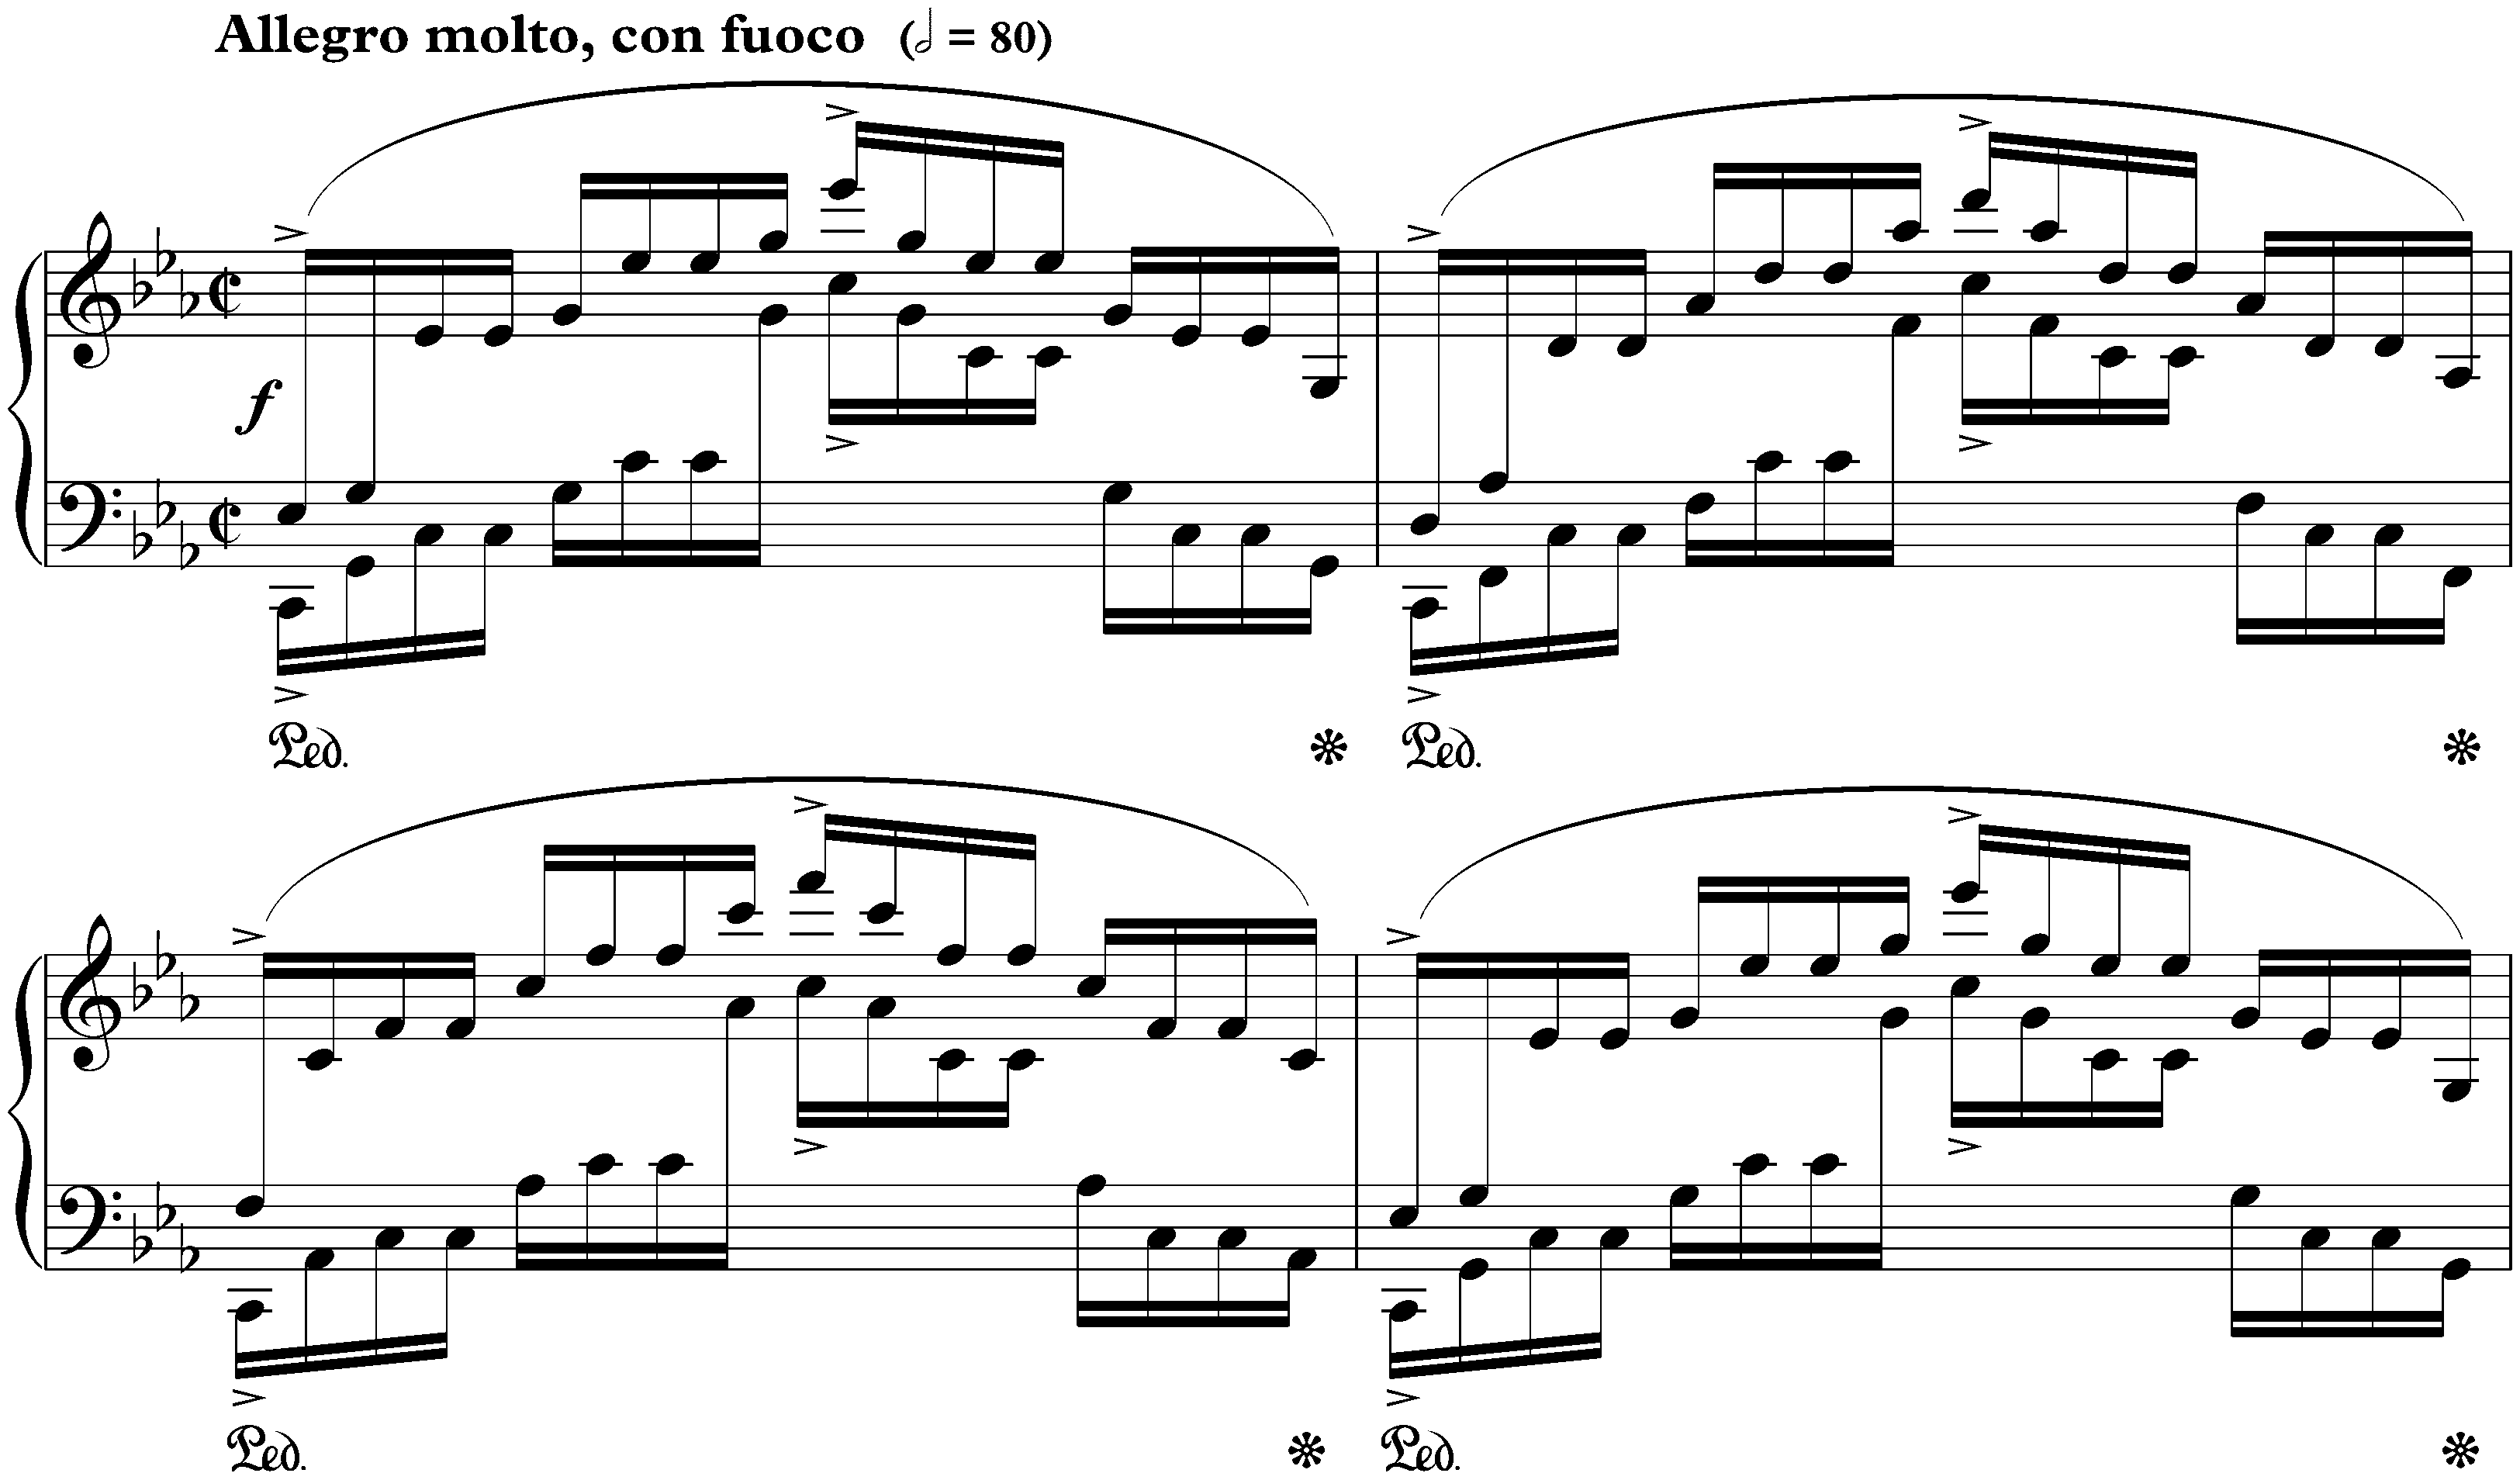 Twelve Études, op. 25; 12. C minor